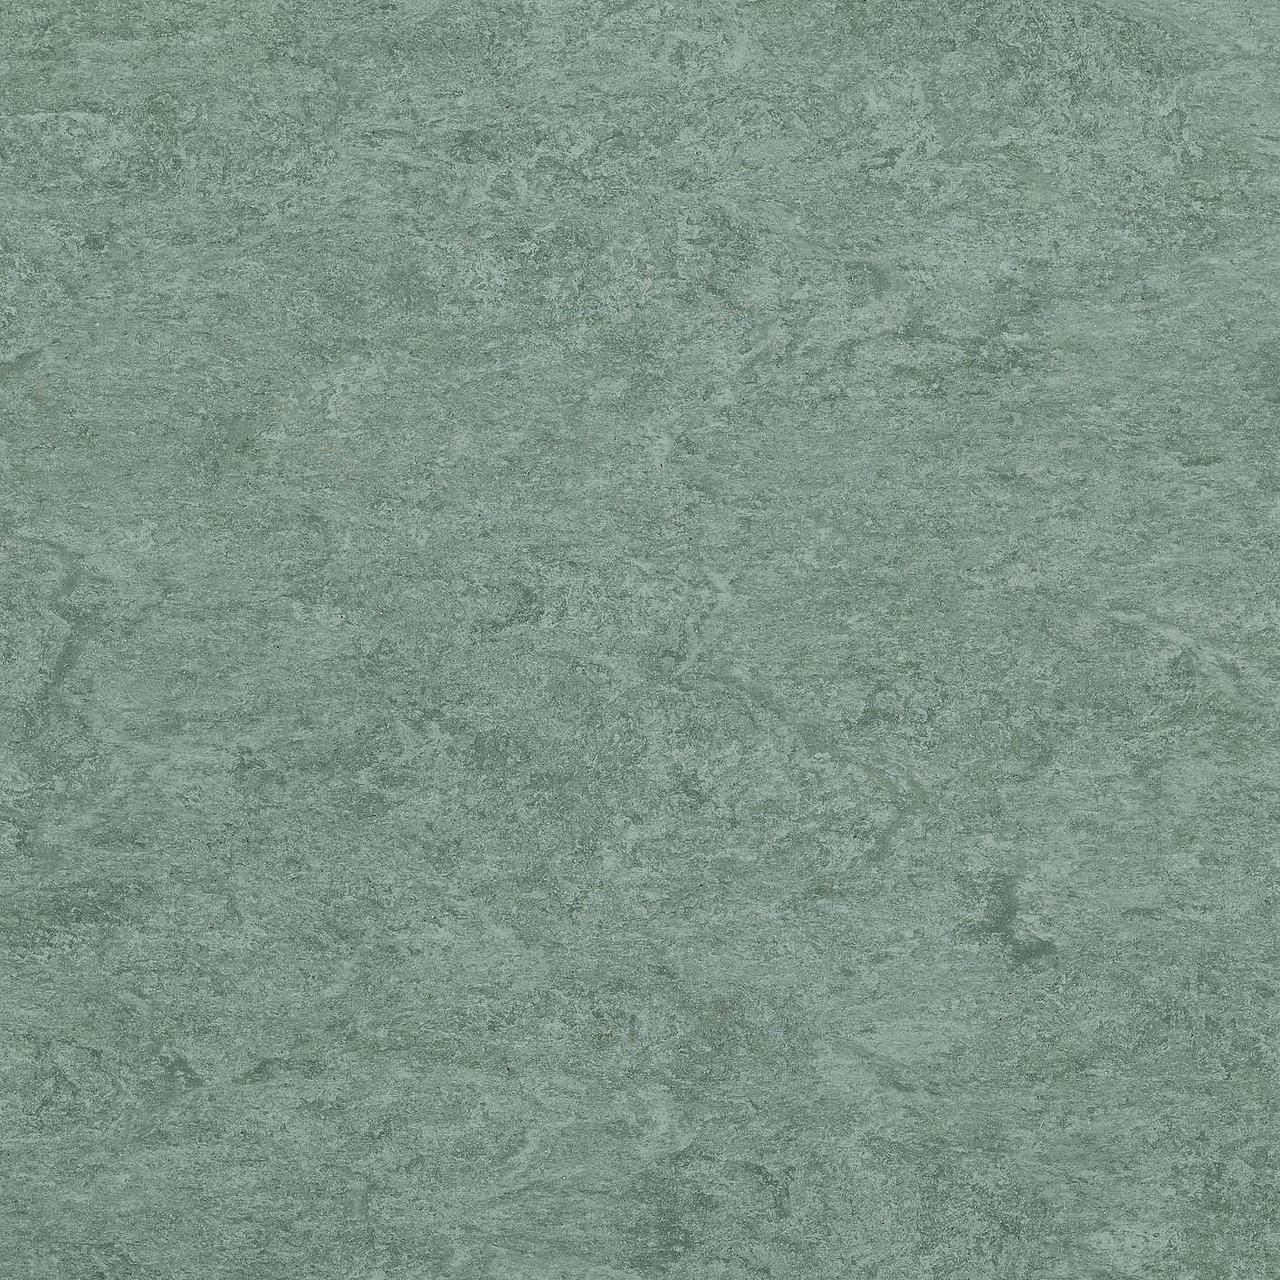 Gerflor DLW Marmorette 0099 Grey Turquoise-Ipr 